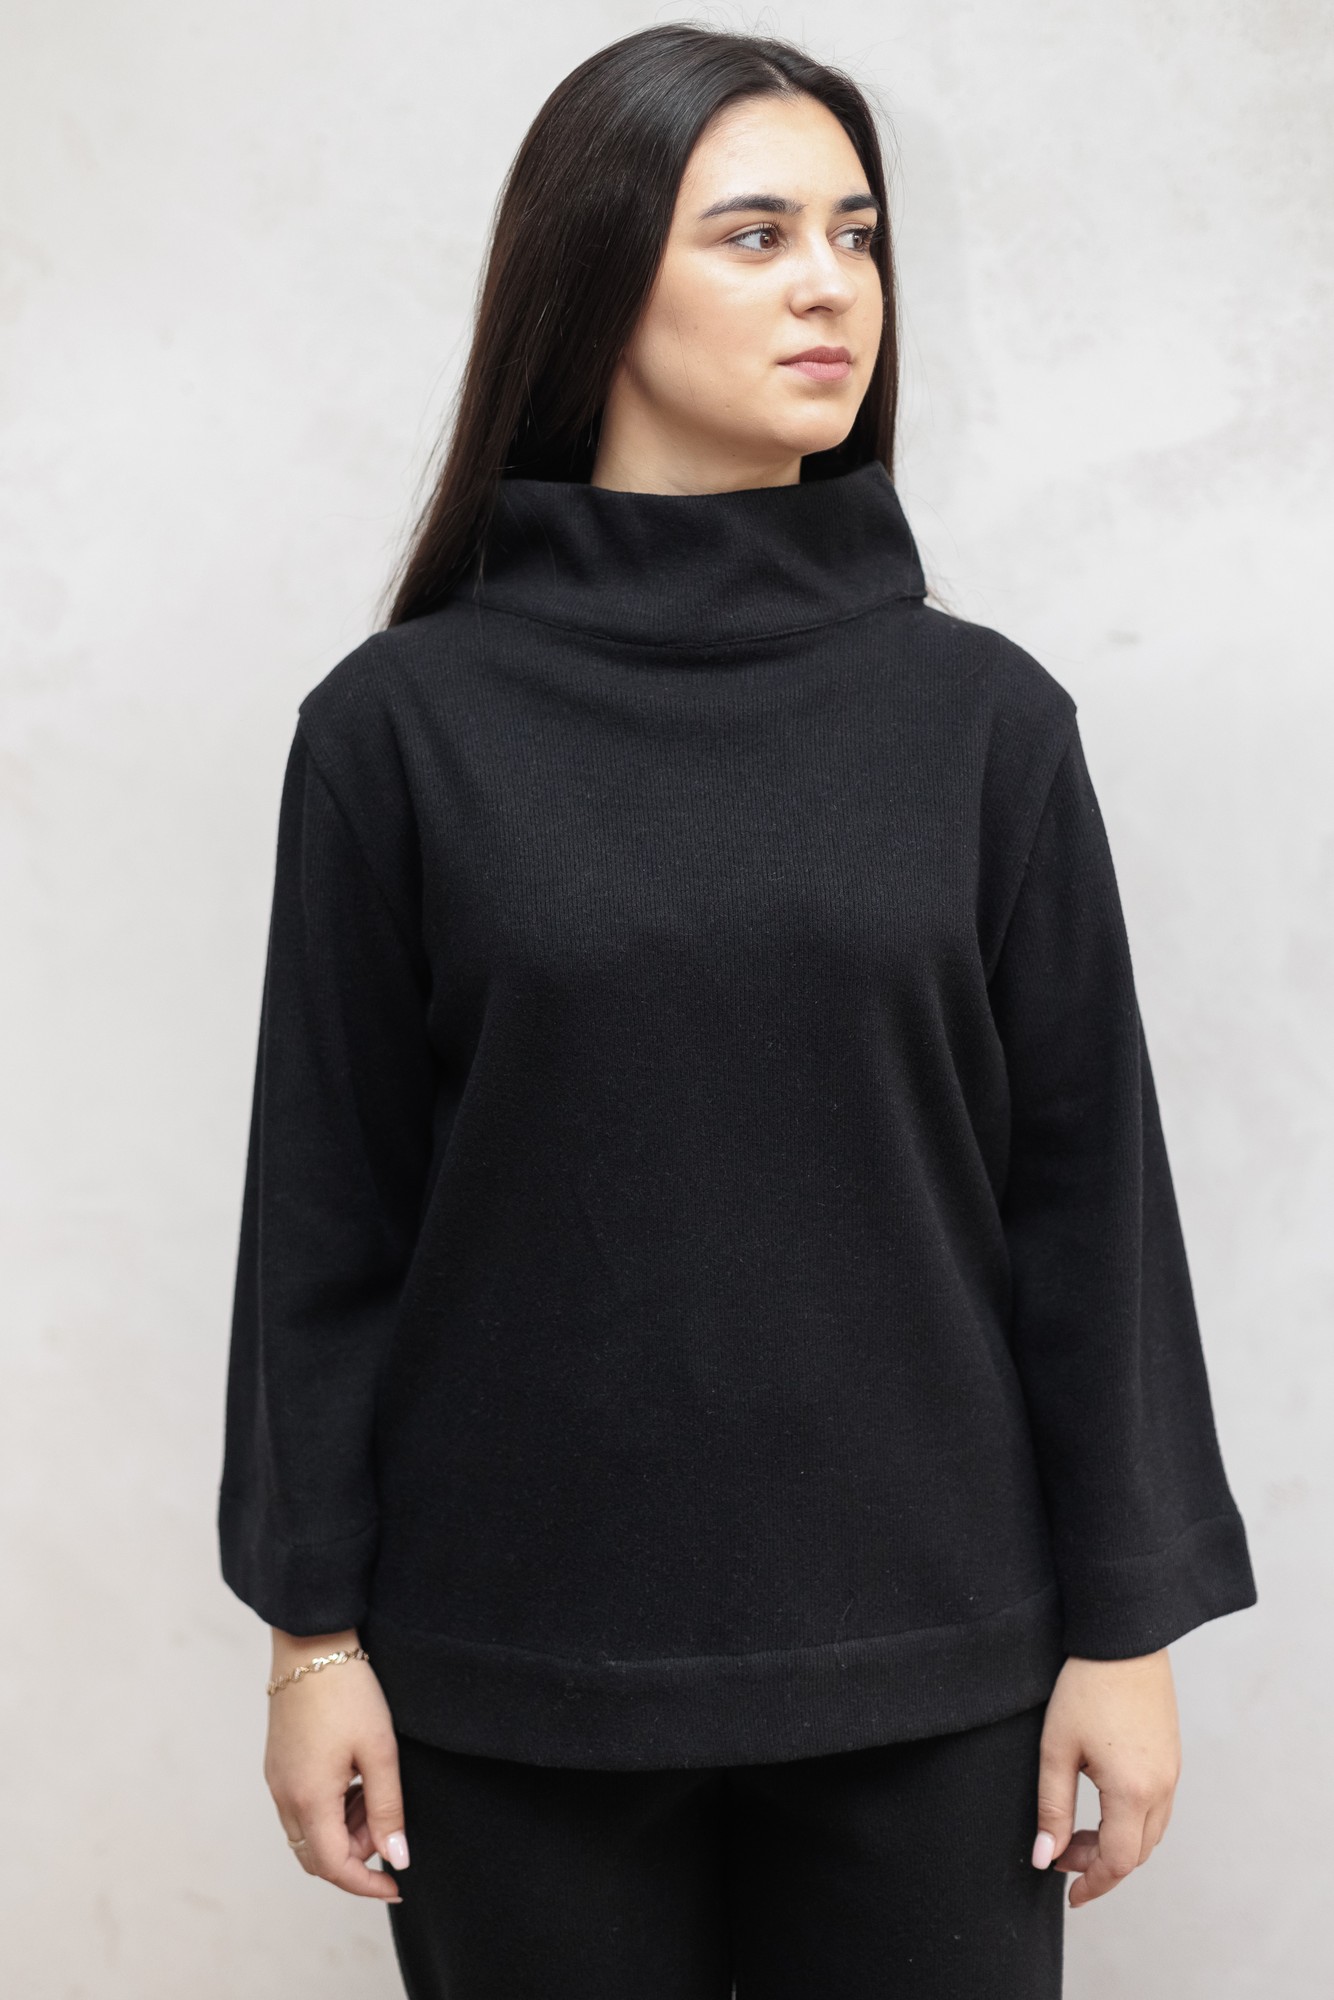 Accen sweater black